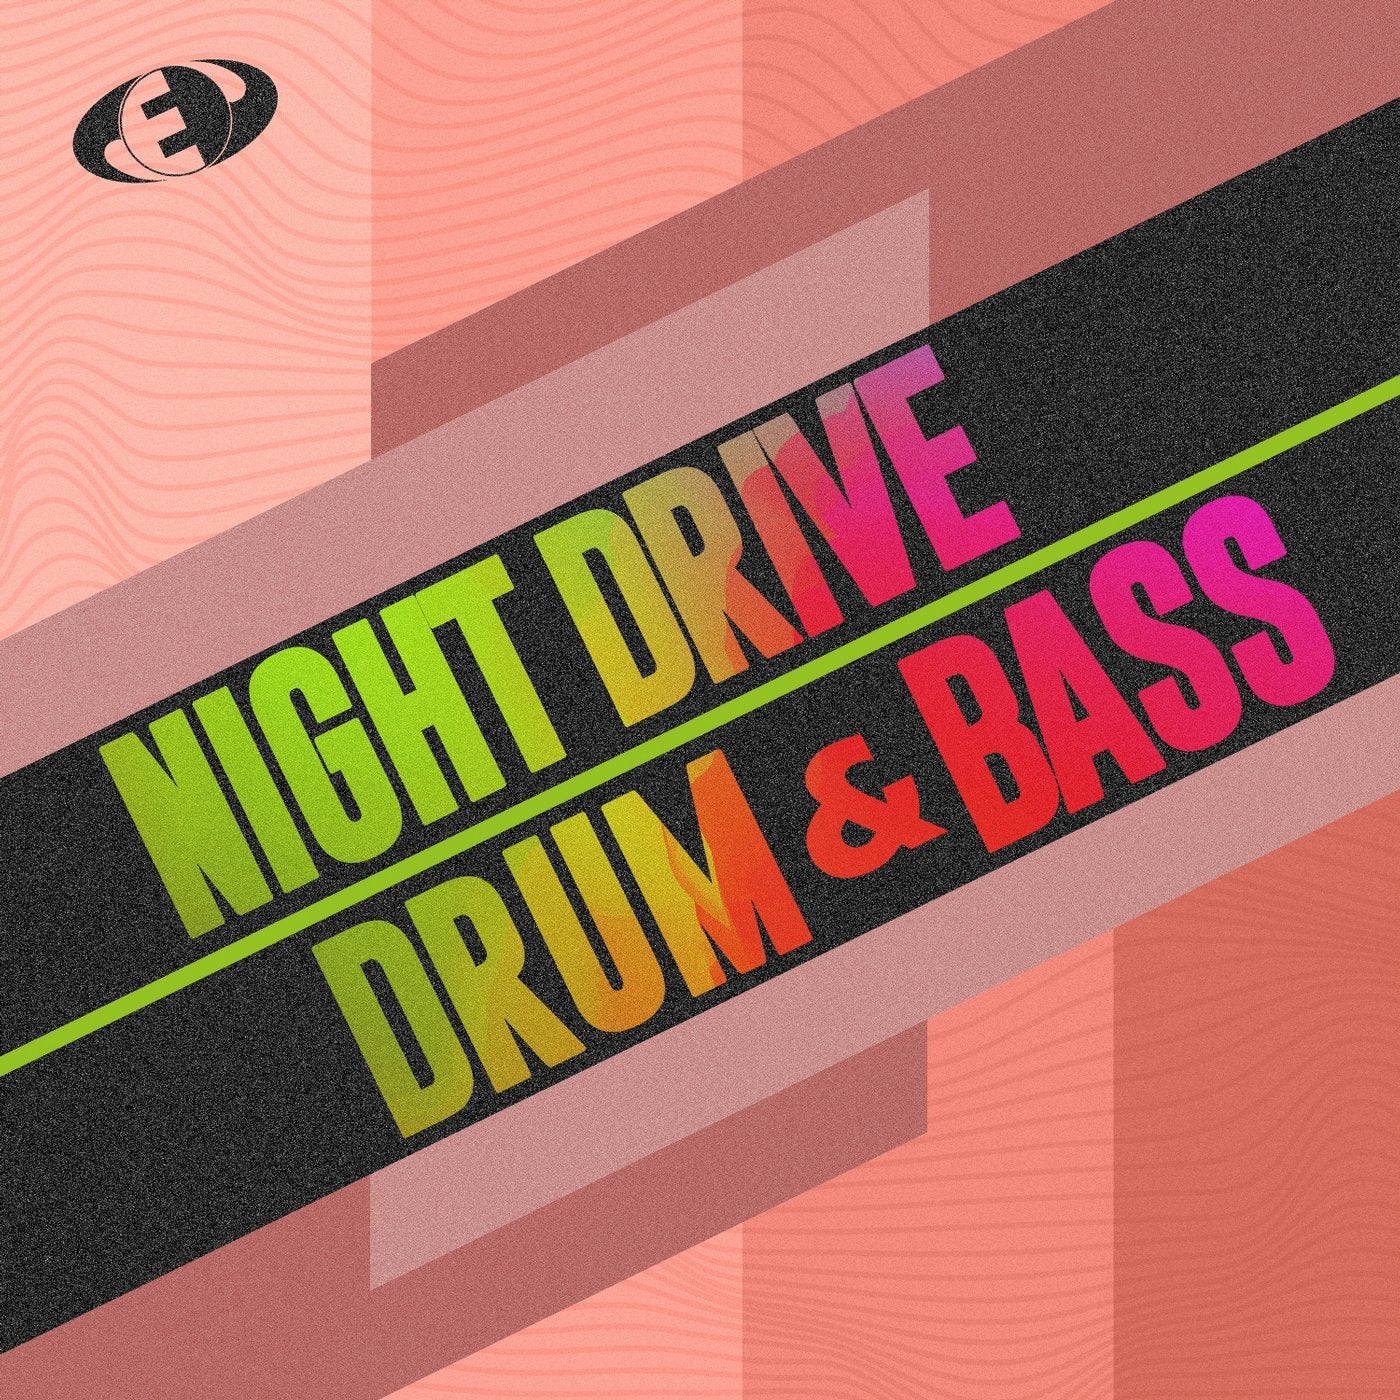 Night Drive Drum & Bass, Vol.2